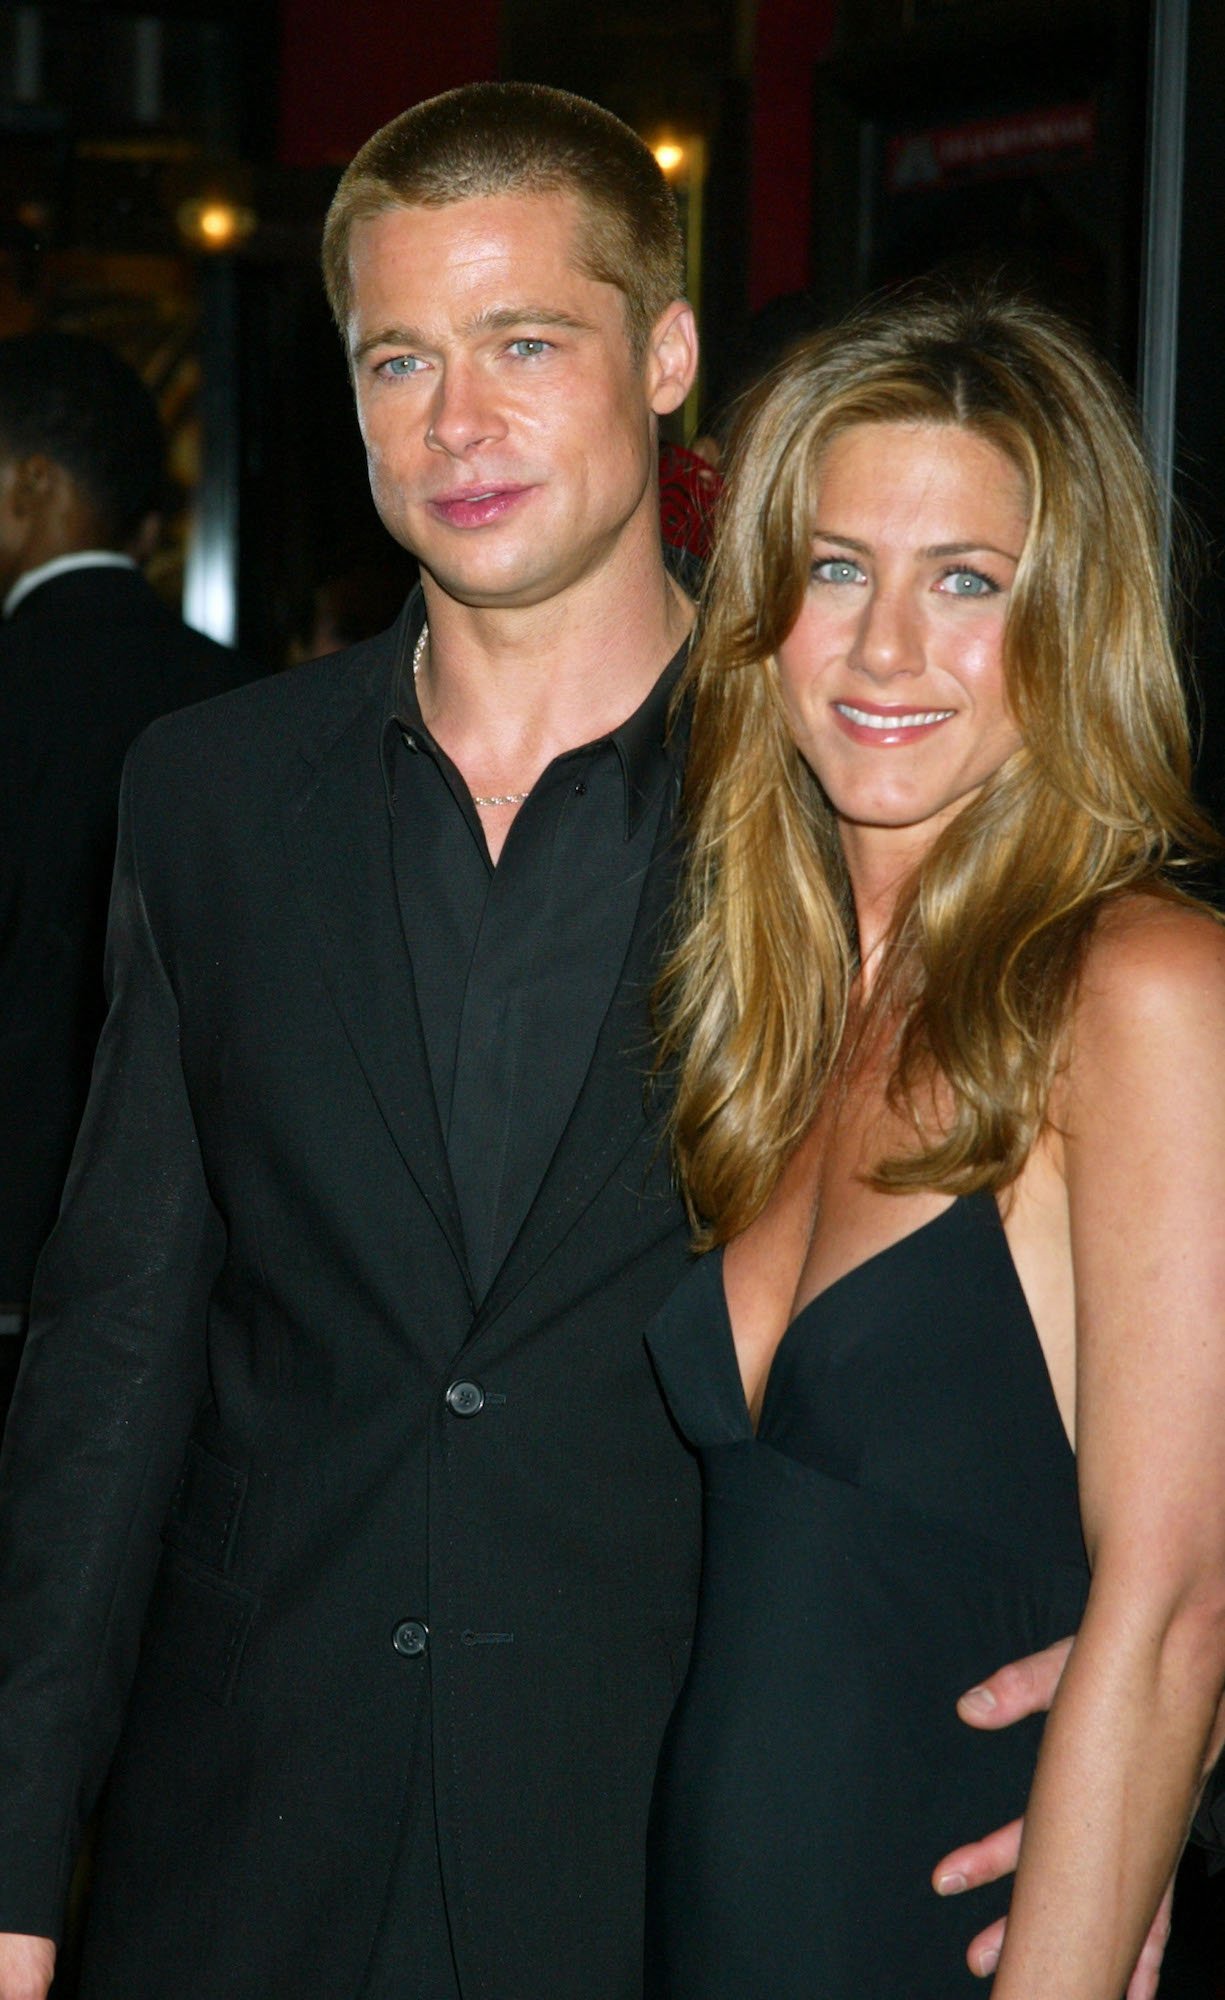 Brad Pitt and Jennifer Aniston attending the "Troy" New York Premiere